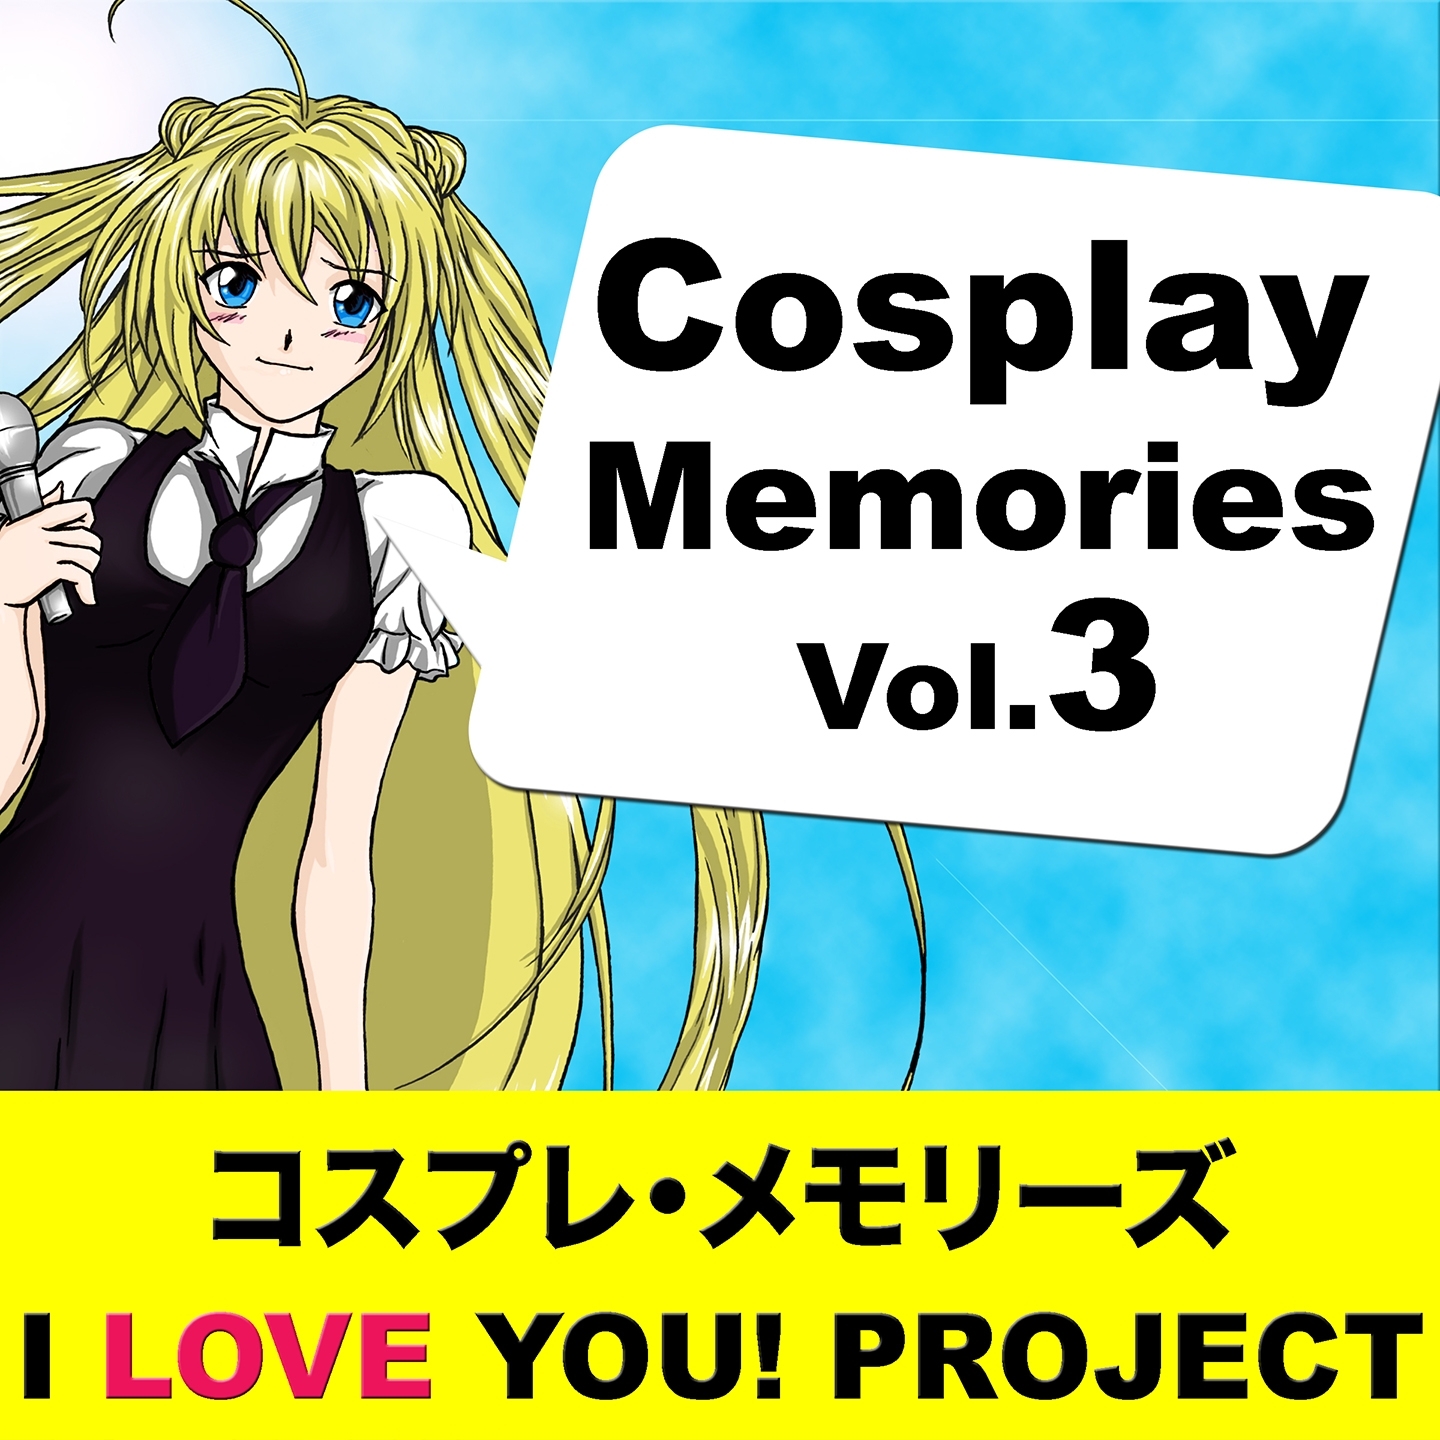 Cosplay Memories, Vol. 3